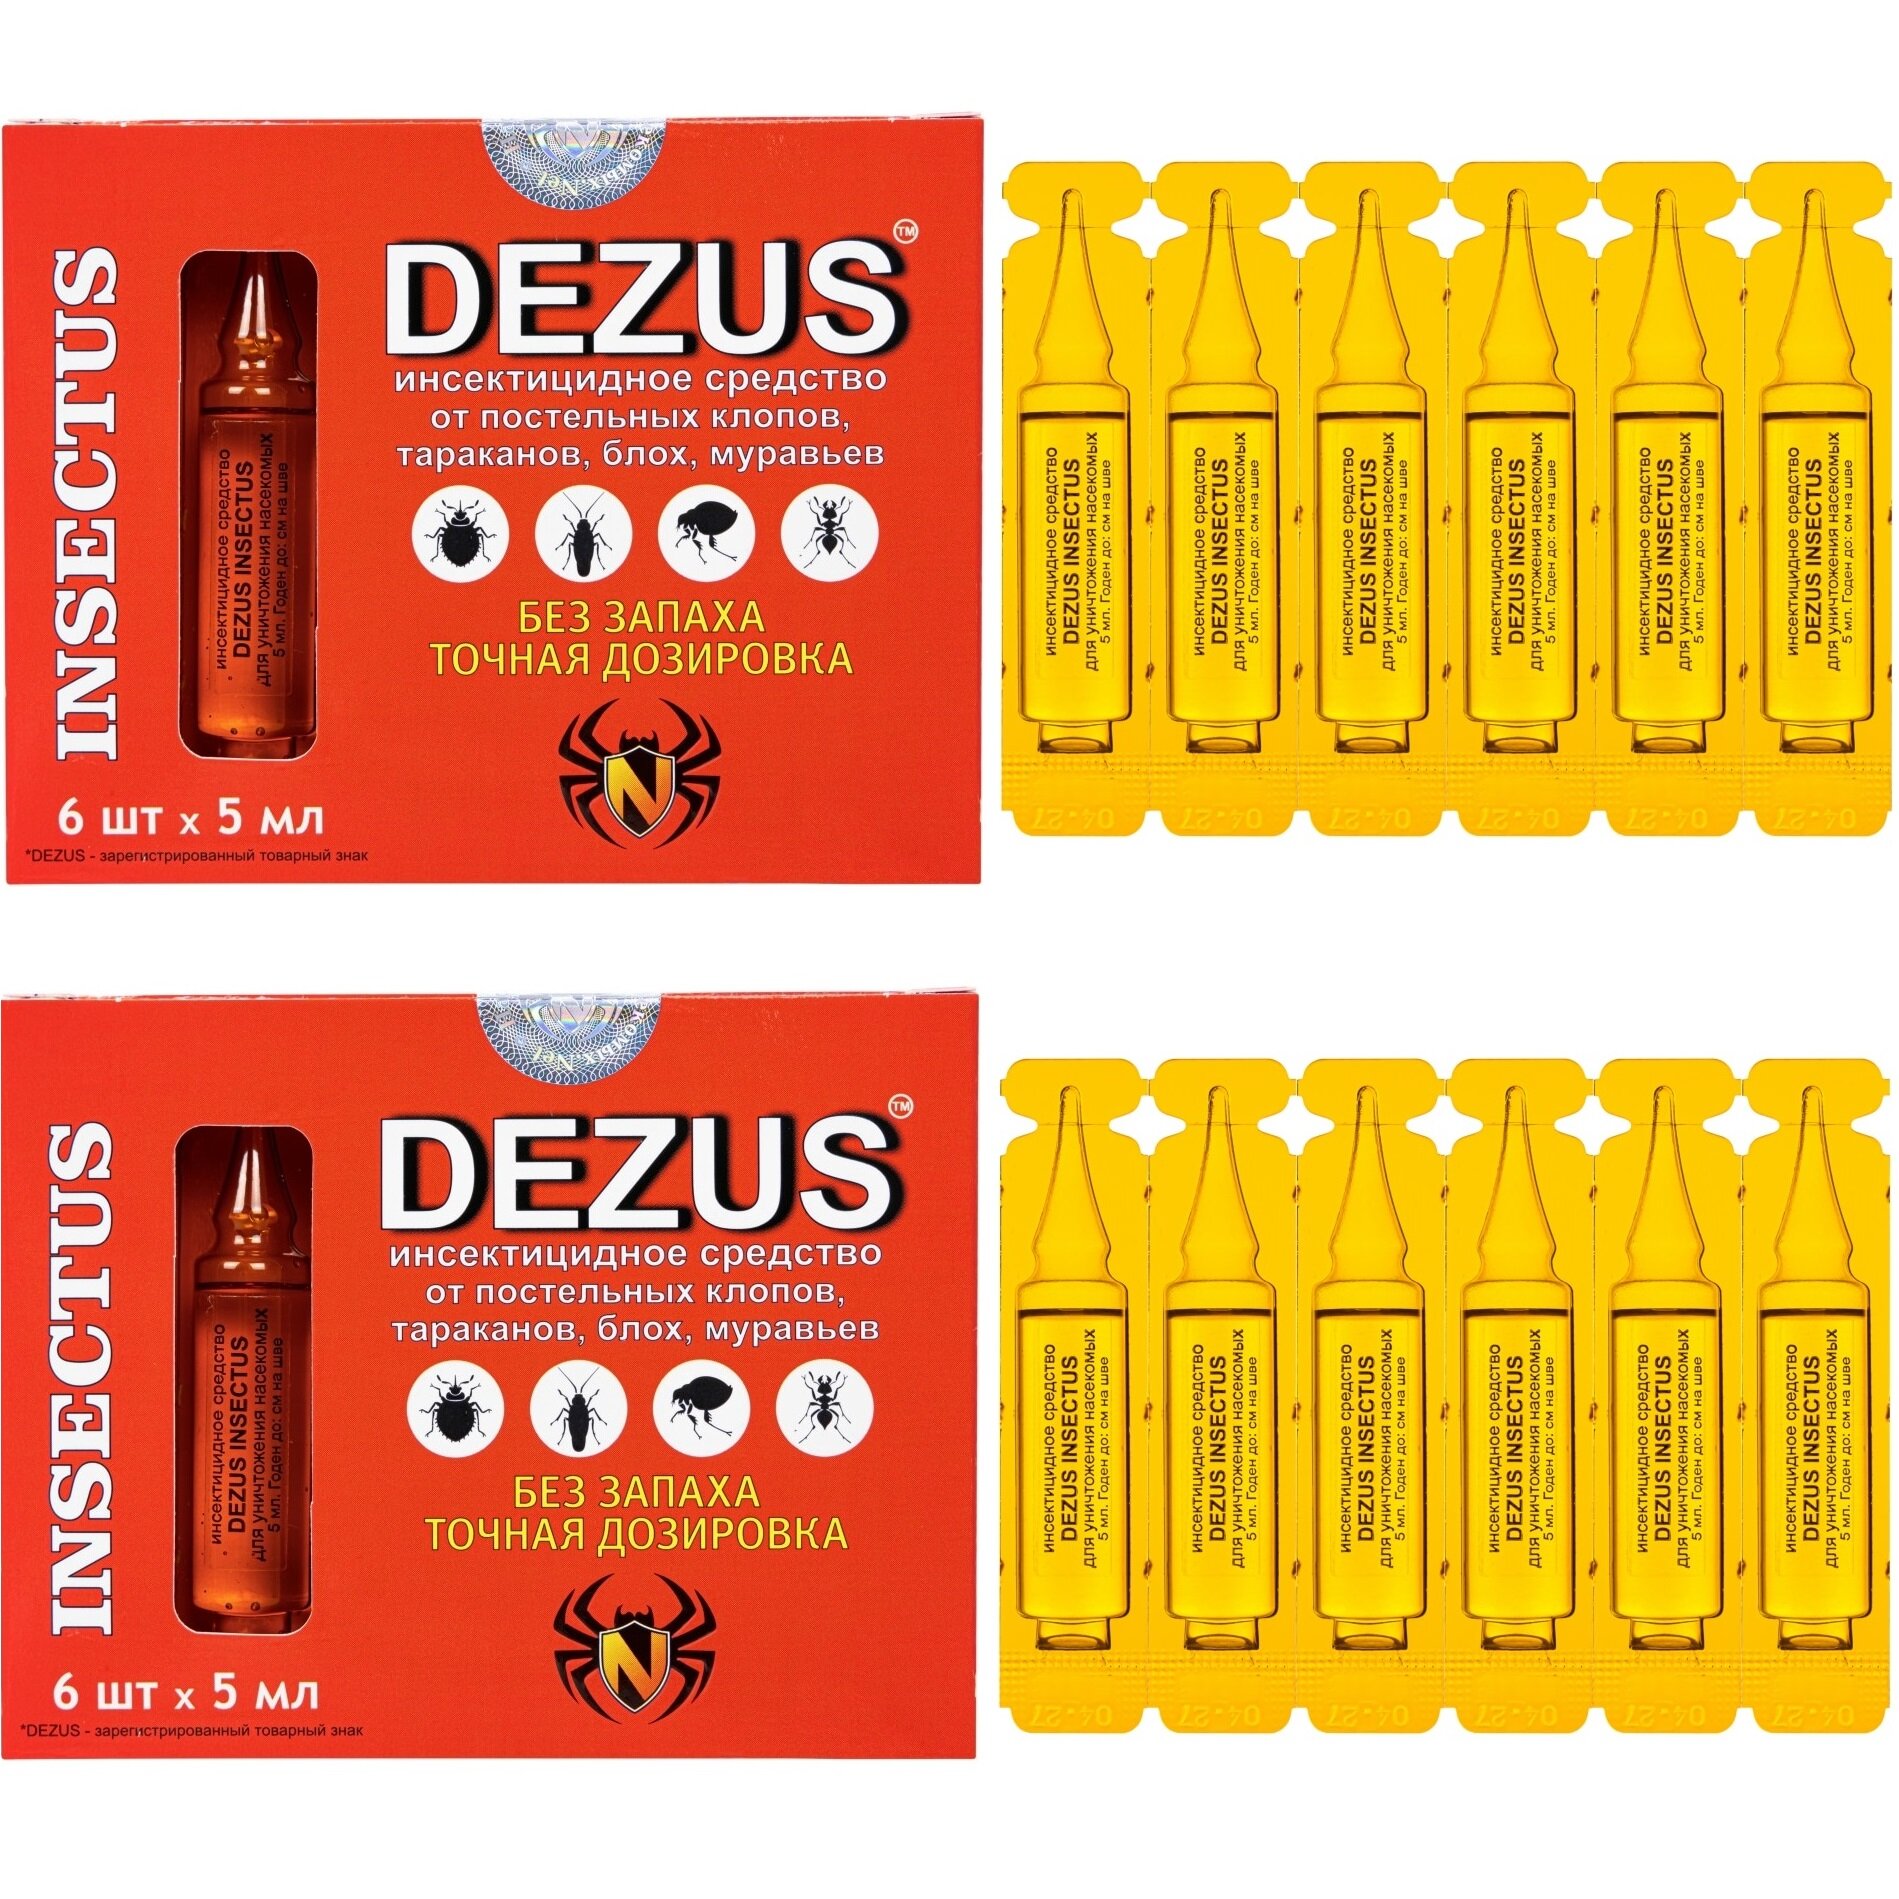 Dezus (Дезус) Insectus средство от клопов, тараканов, блох, муравьев, 6 ампул 2 шт